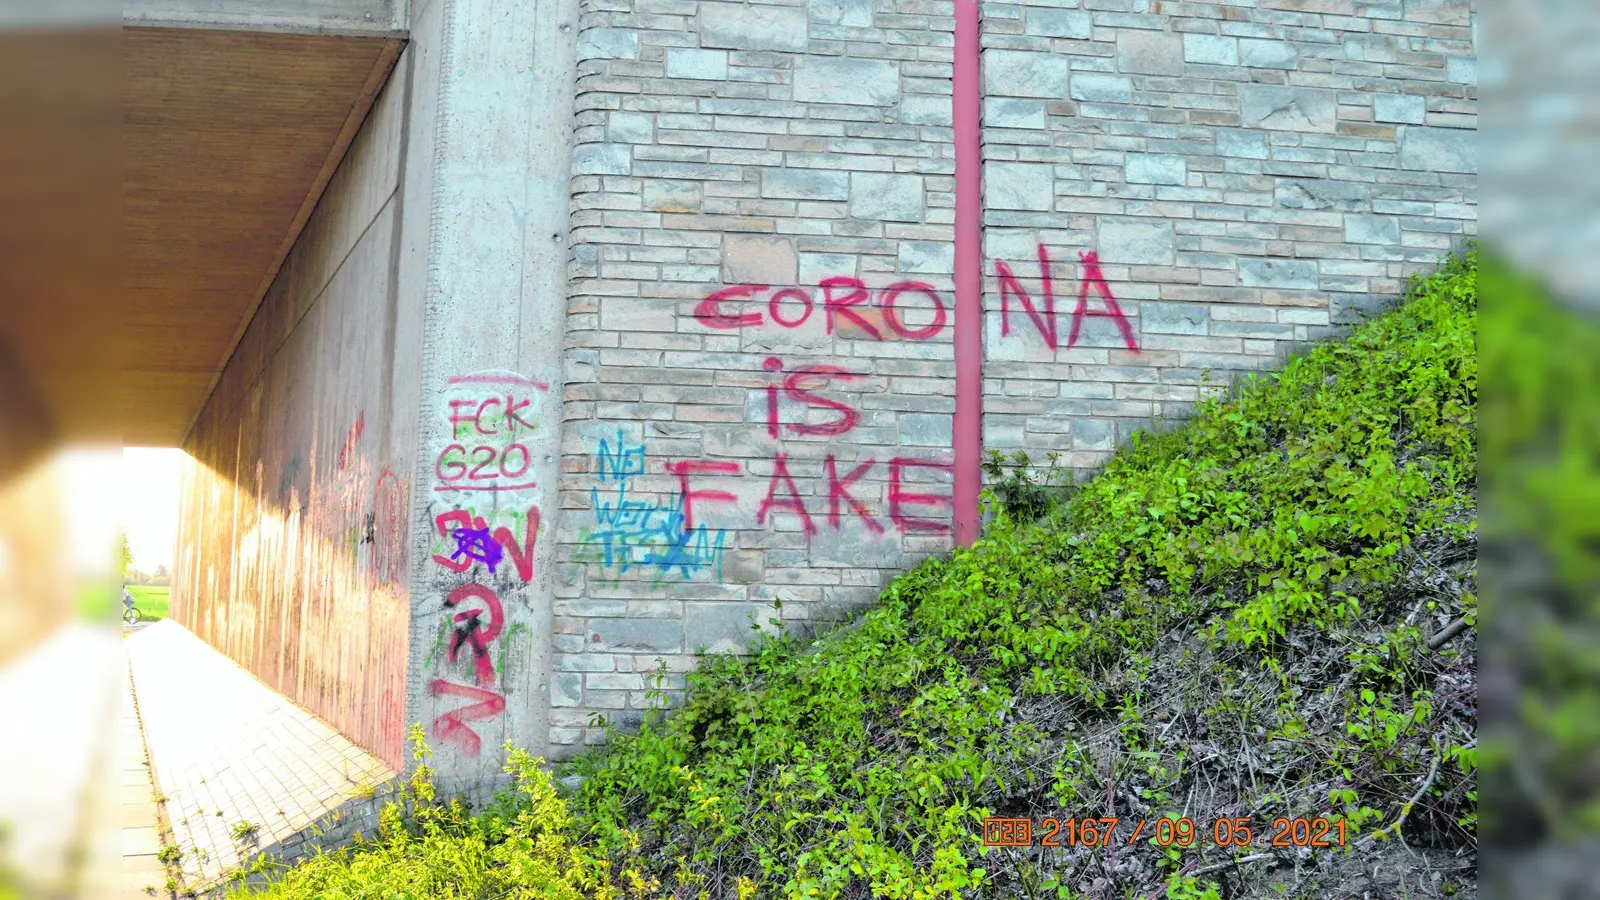 Graffititäter gestellt (Foto: nh)